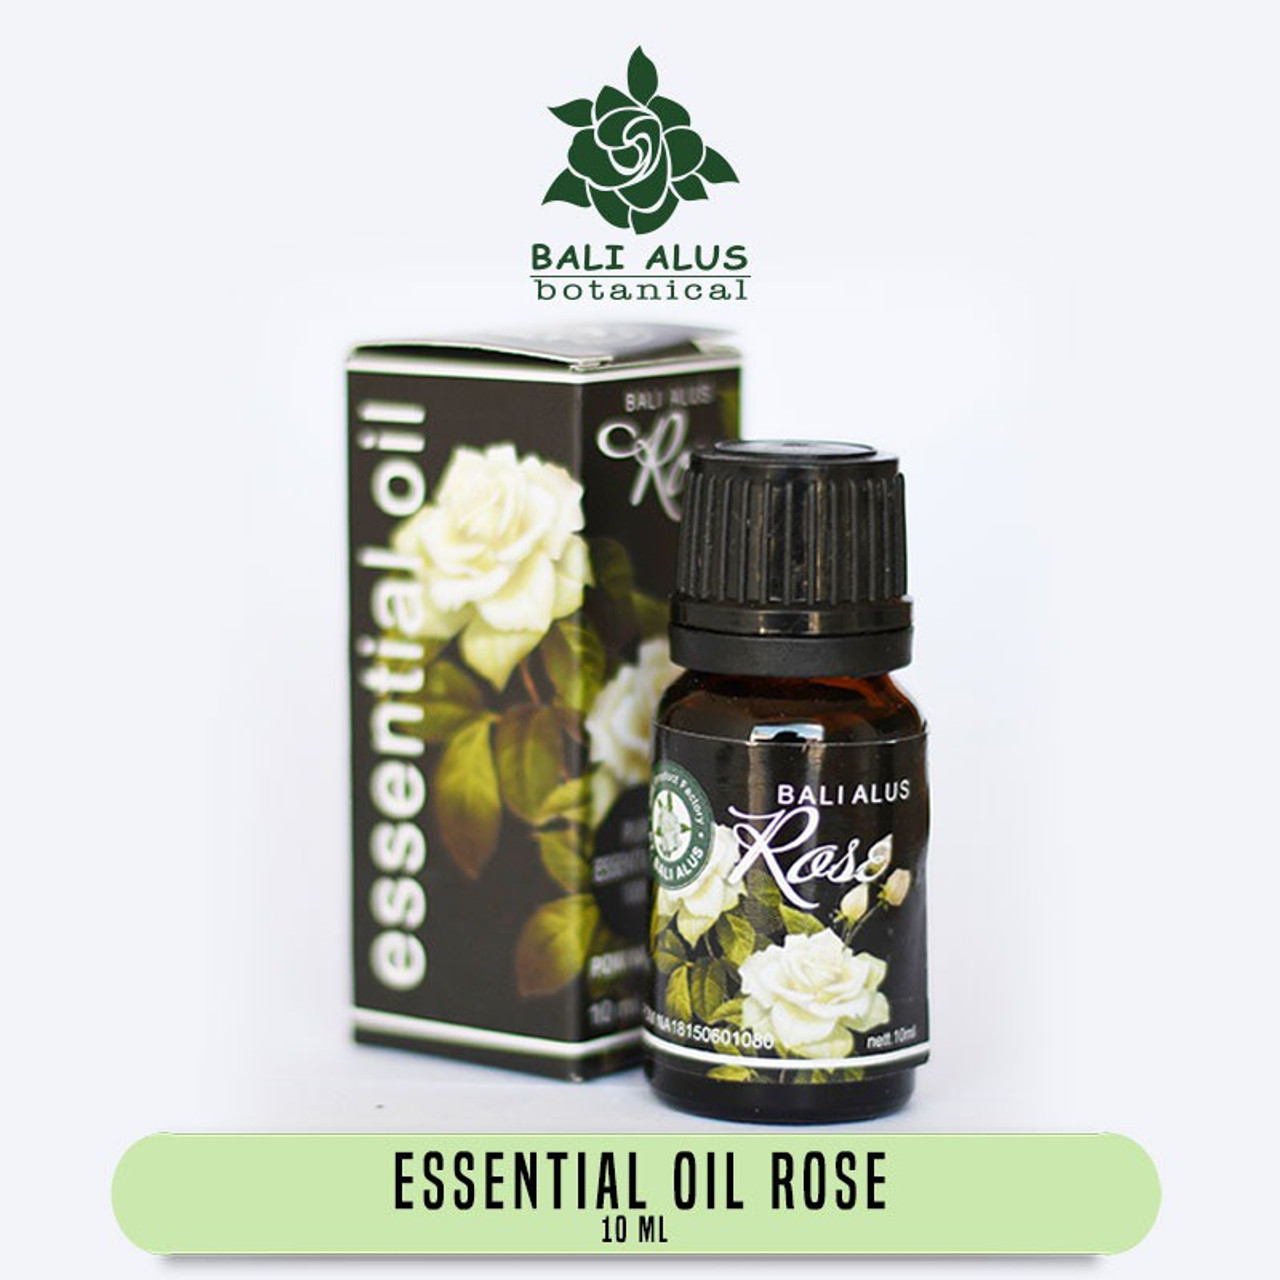 Bali Alus Essential Oil Rose, 10ml